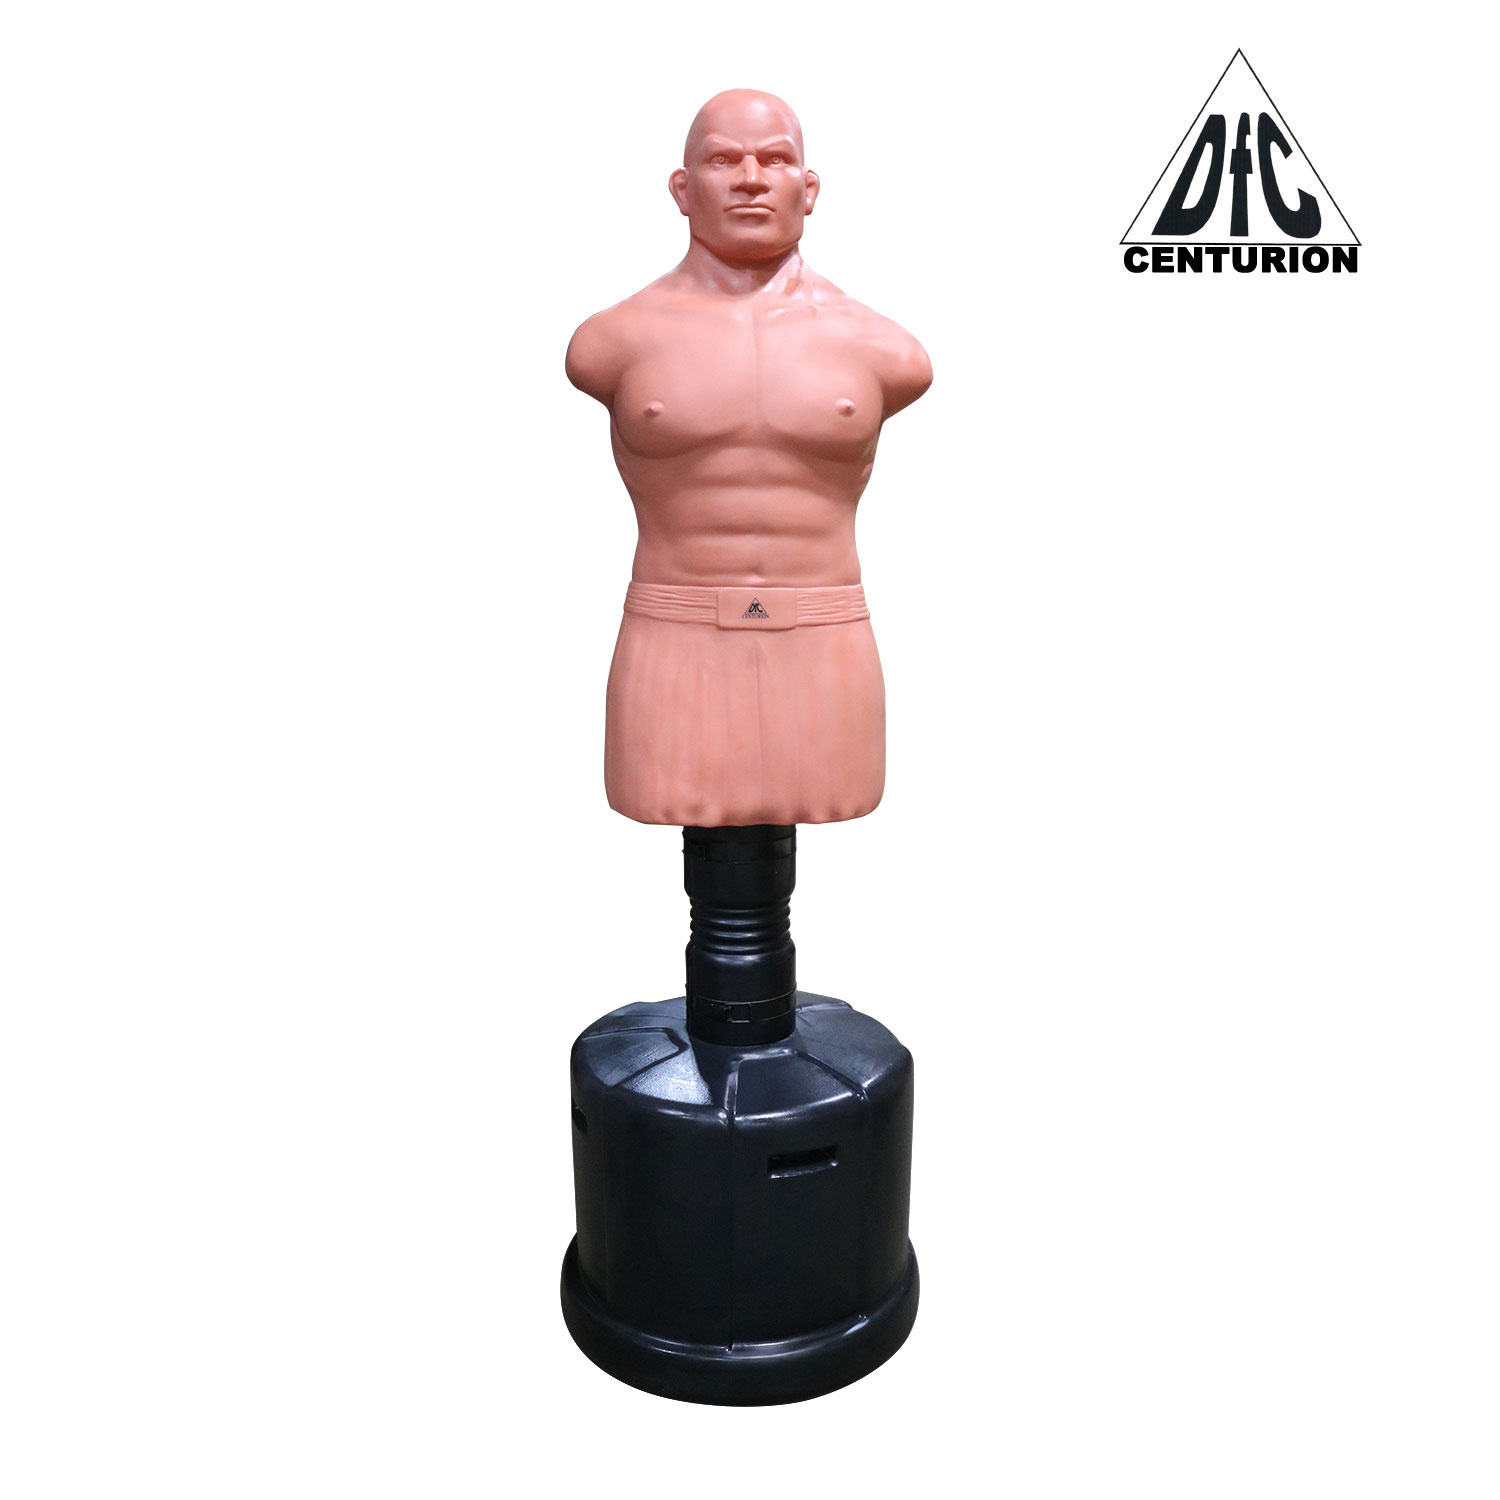 DFC Centurion Boxing Punching Man-Heavy водоналивной - бежевый из каталога манекенов для бокса в Сочи по цене 45990 ₽